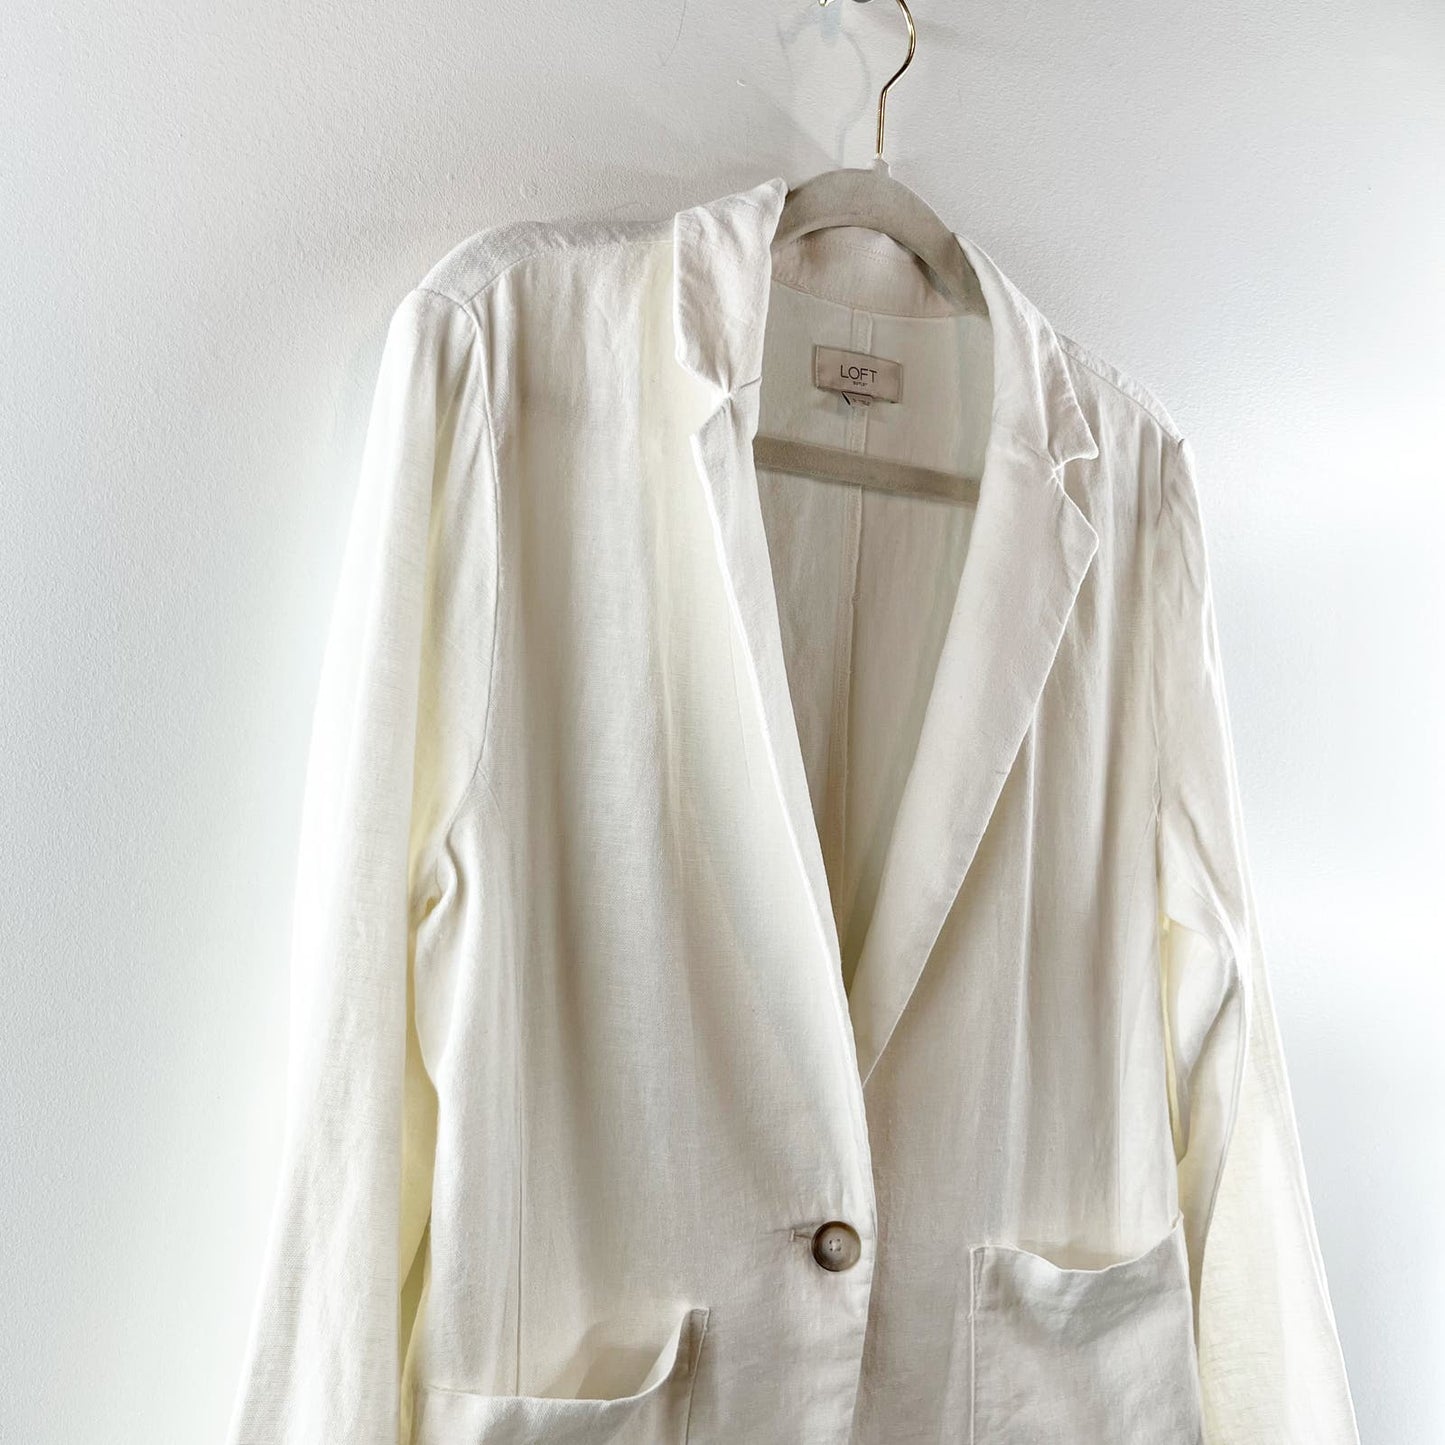 LOFT Linen Blend Causal Single Breasted Blazer Jacket White Small